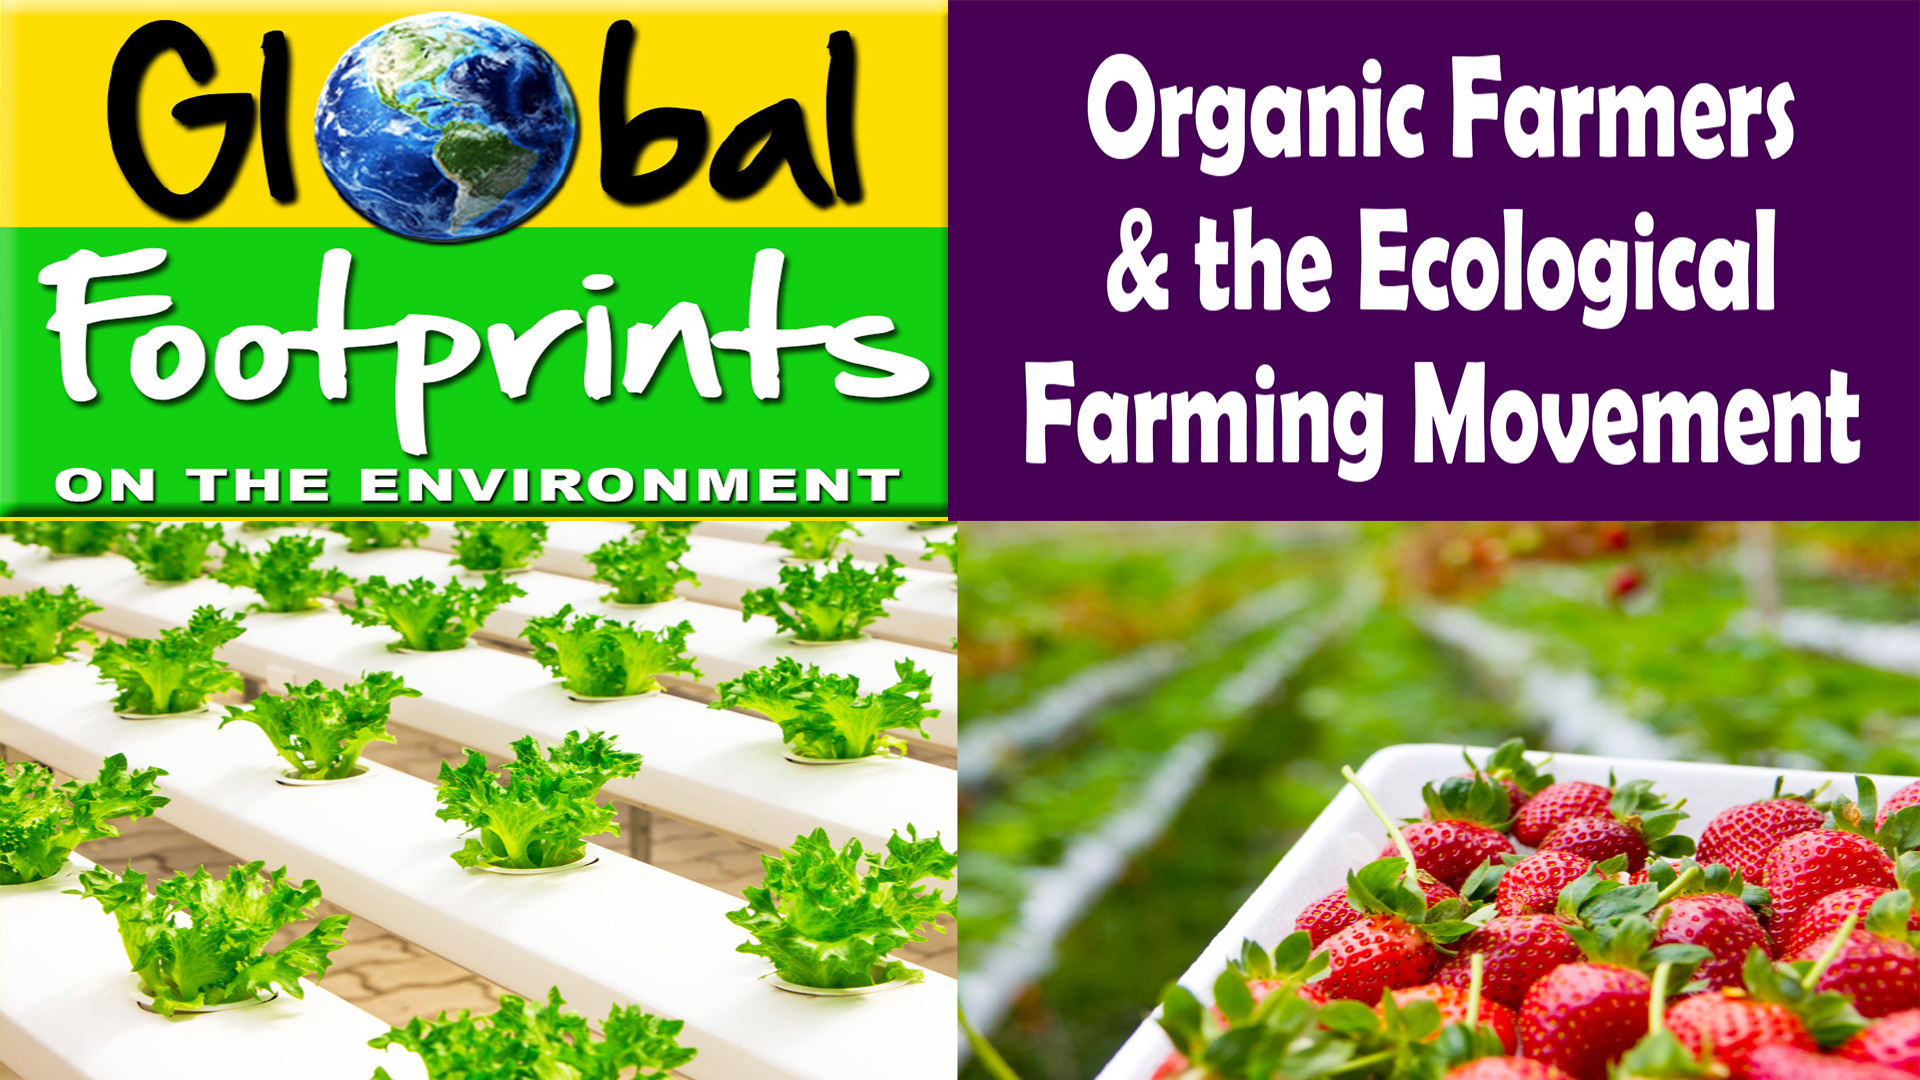 K4701 - Organic Farmers & The Ecological Farming Movement